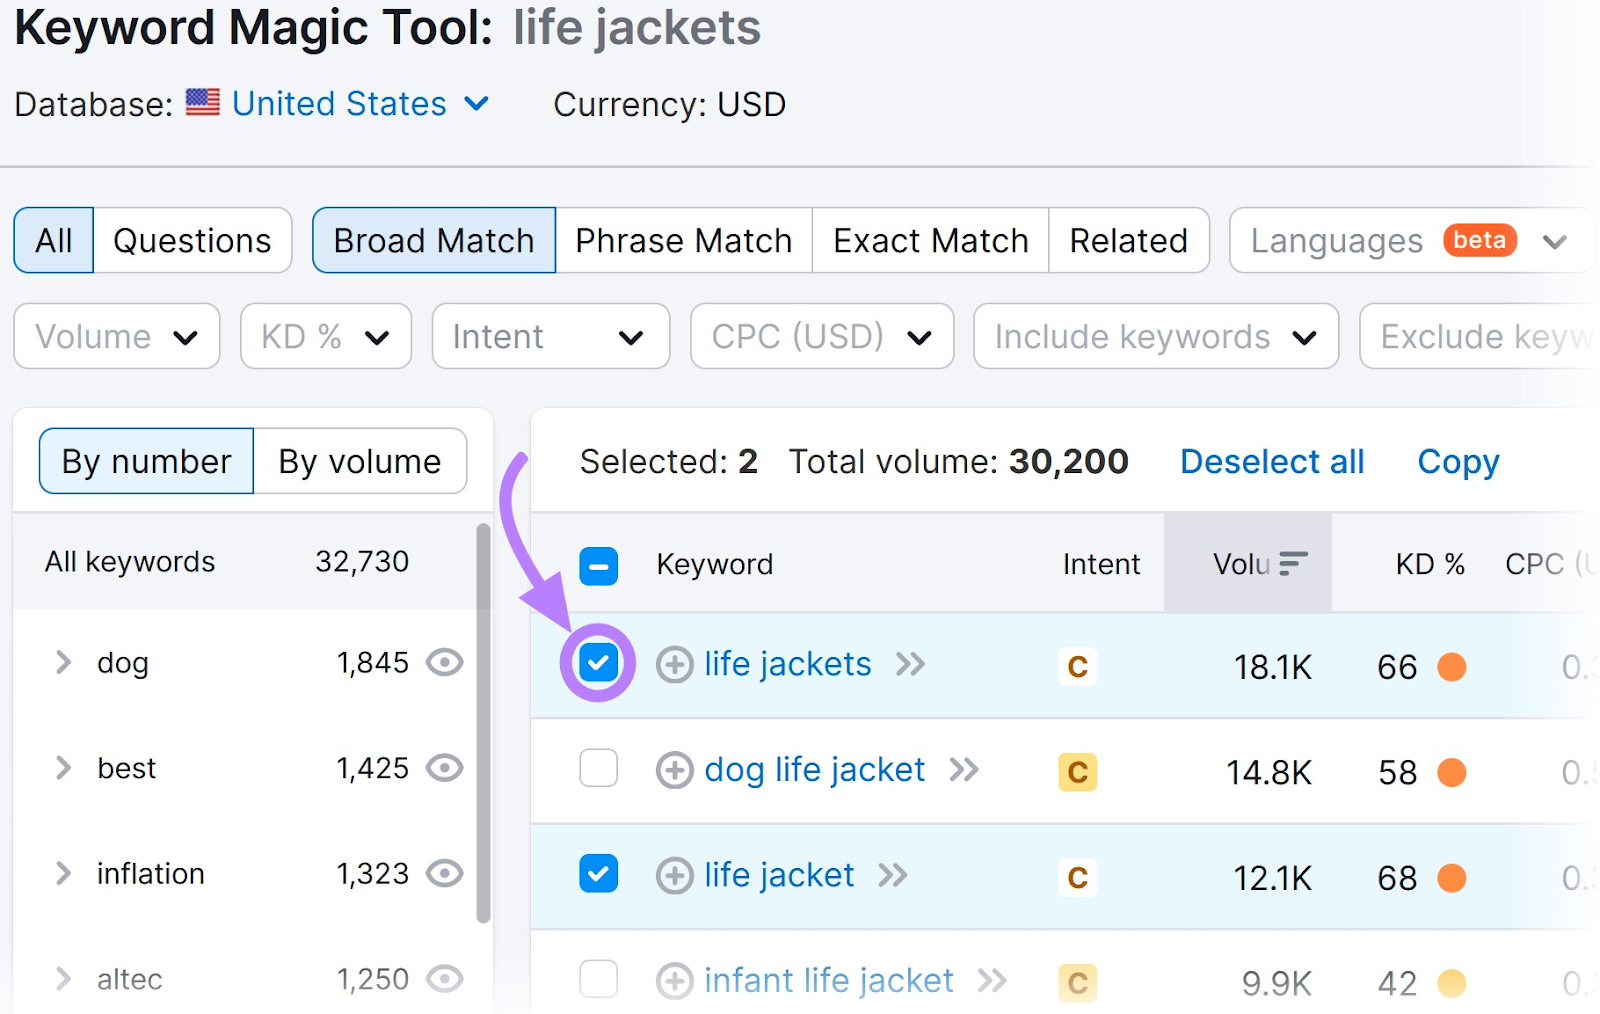 Keyword Magic Tool results for "life jackets"